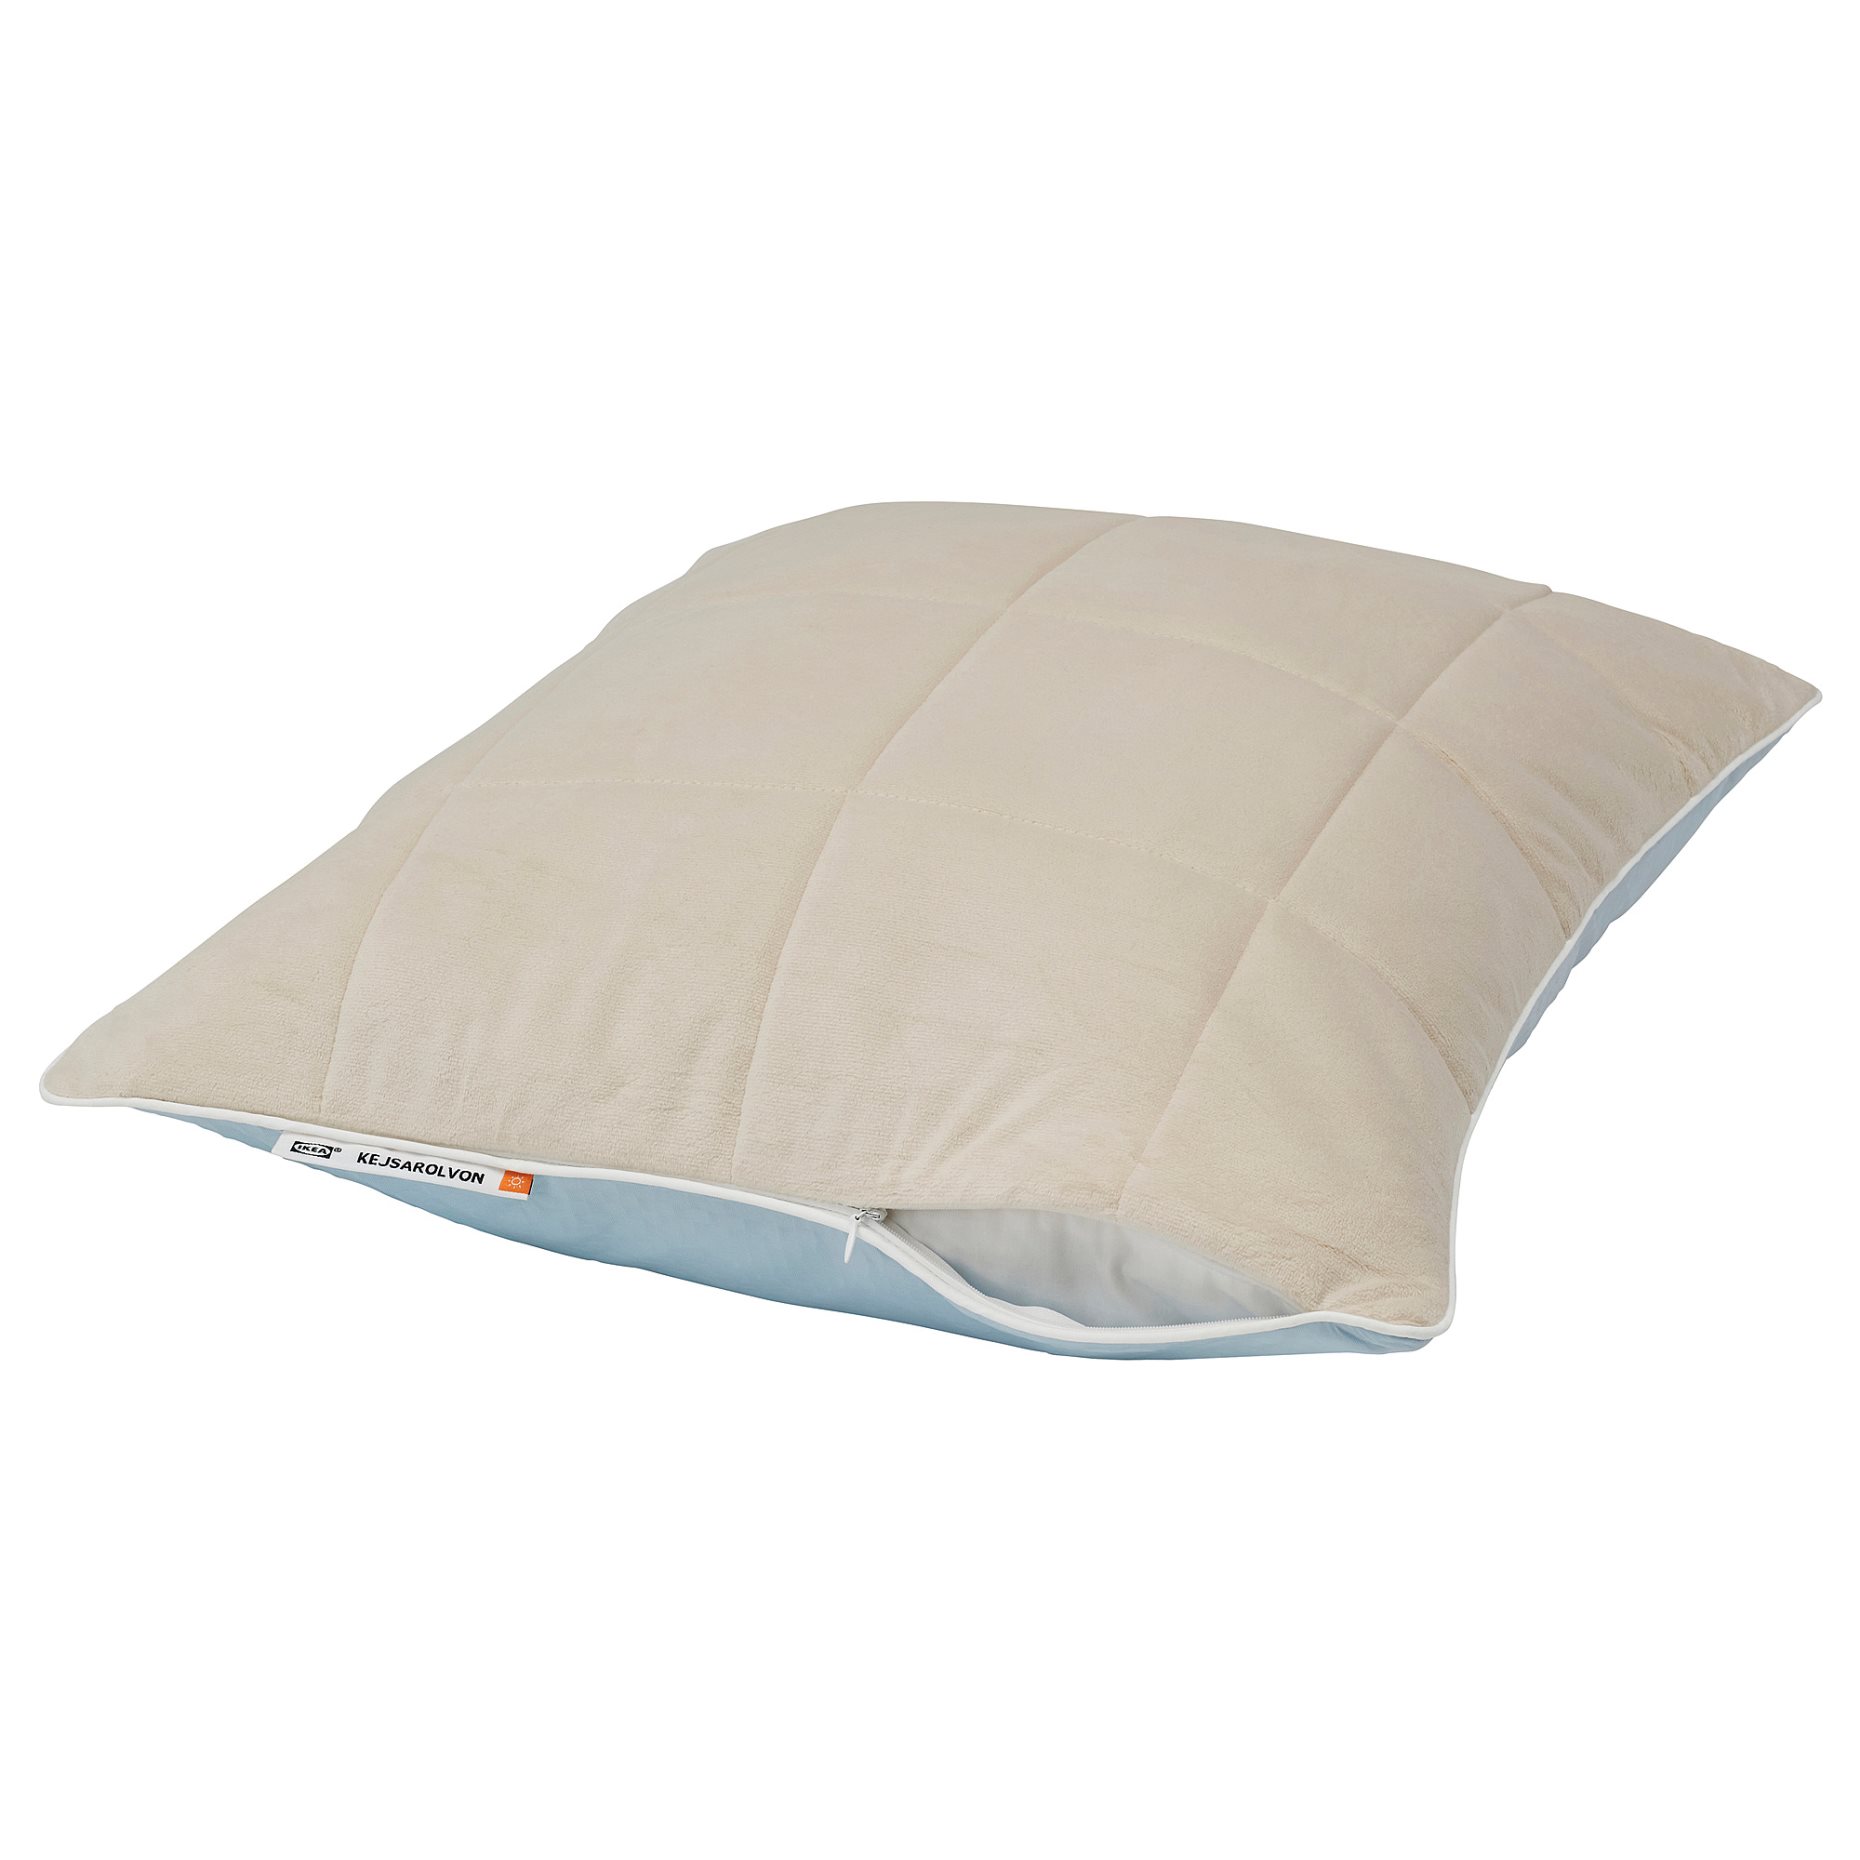 KEJSAROLVON, pillow protector, 50x60 cm, 005.804.57